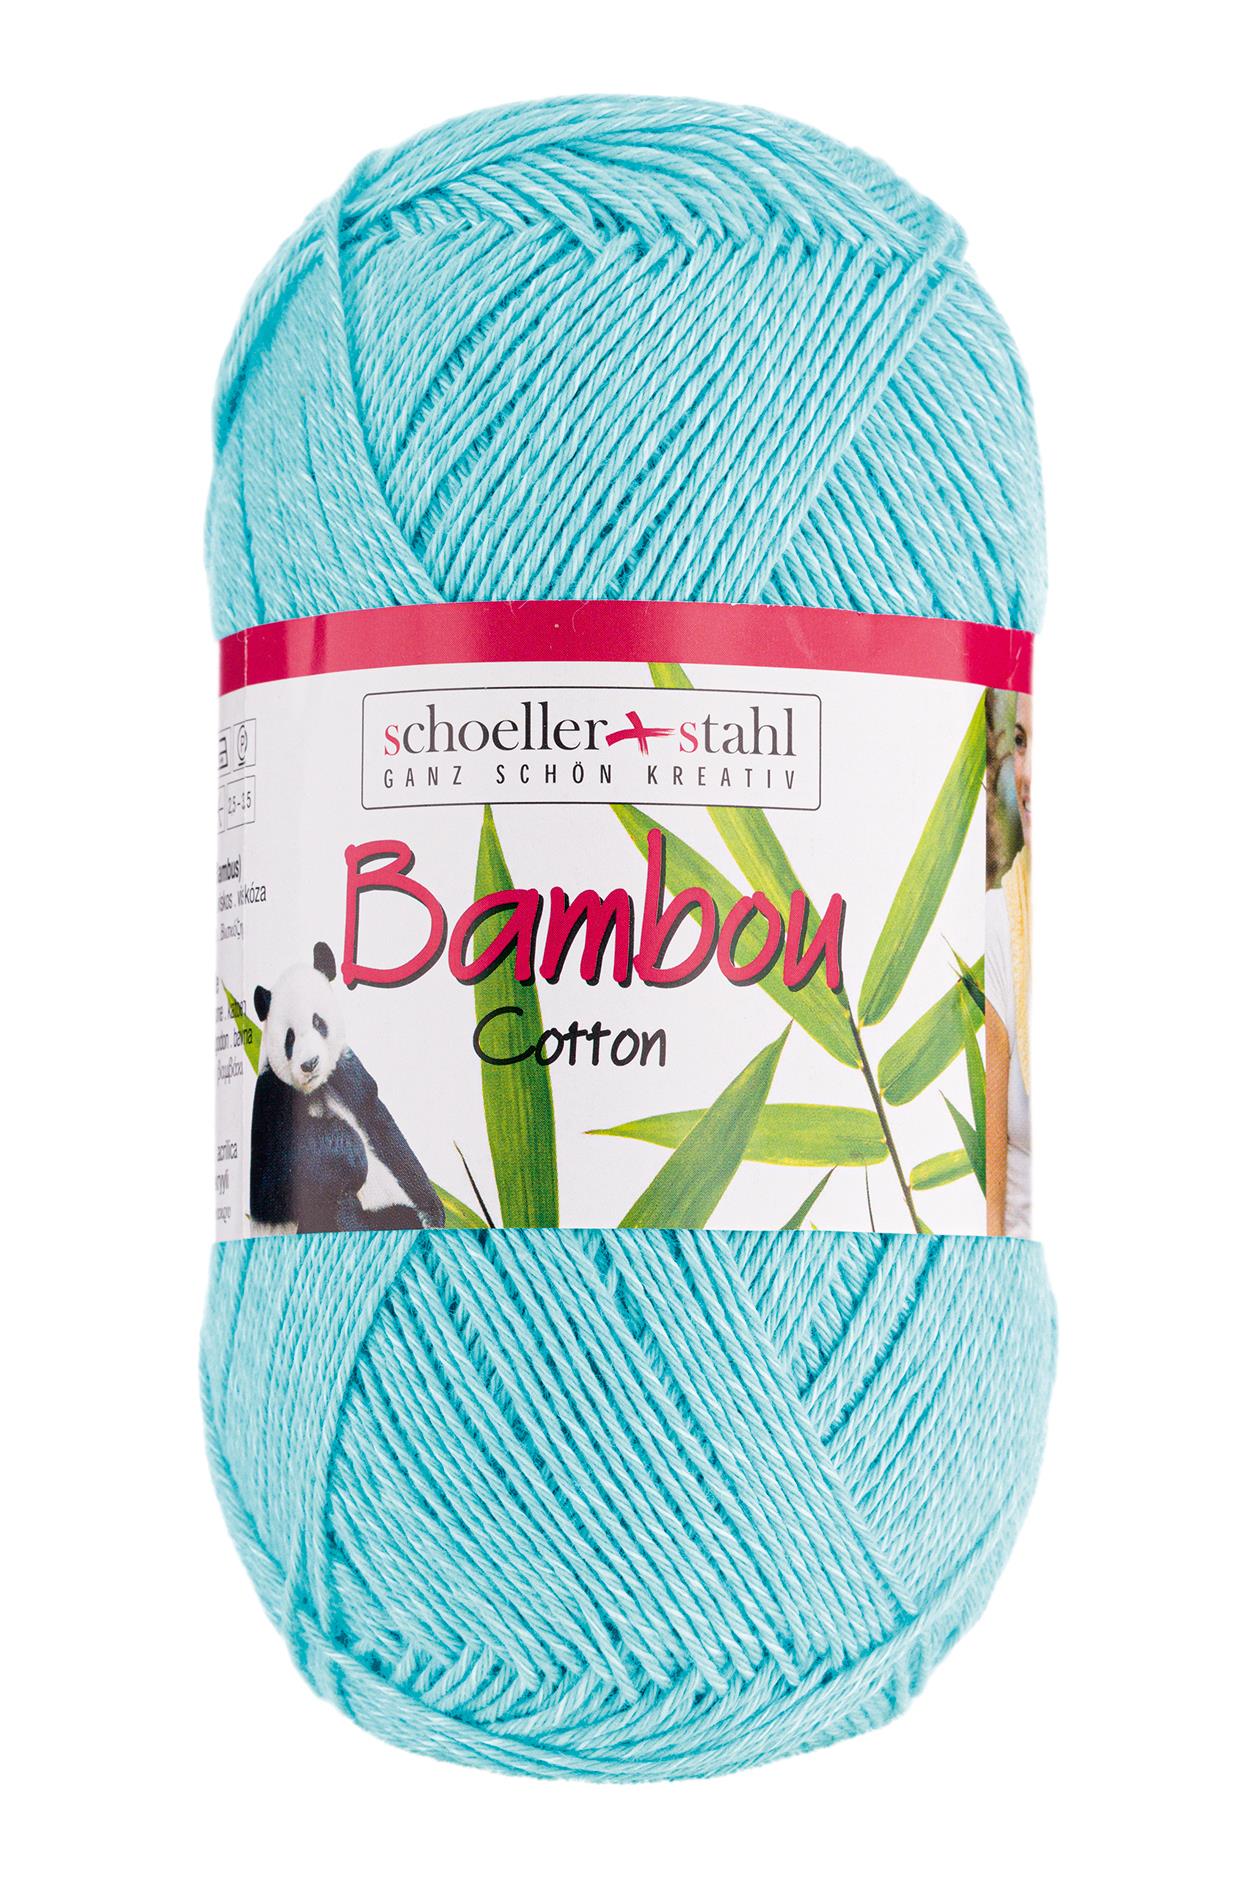 Bambou Cotton 100g, 90286, Farbe 17, pool